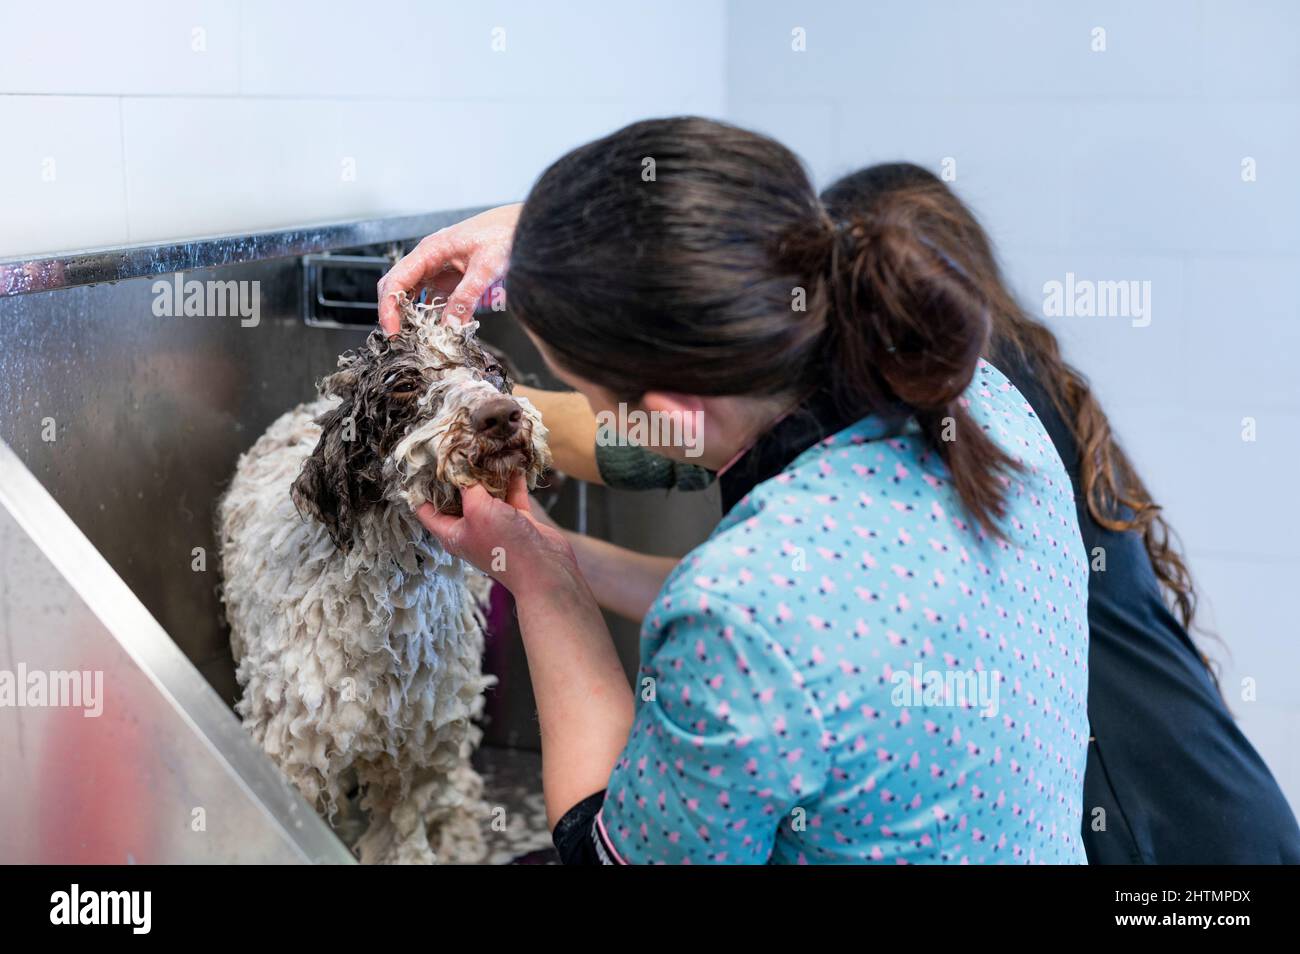 Young woman dog groomer bathing a Spanish Waterdog on a dog bath tub Stock Photo